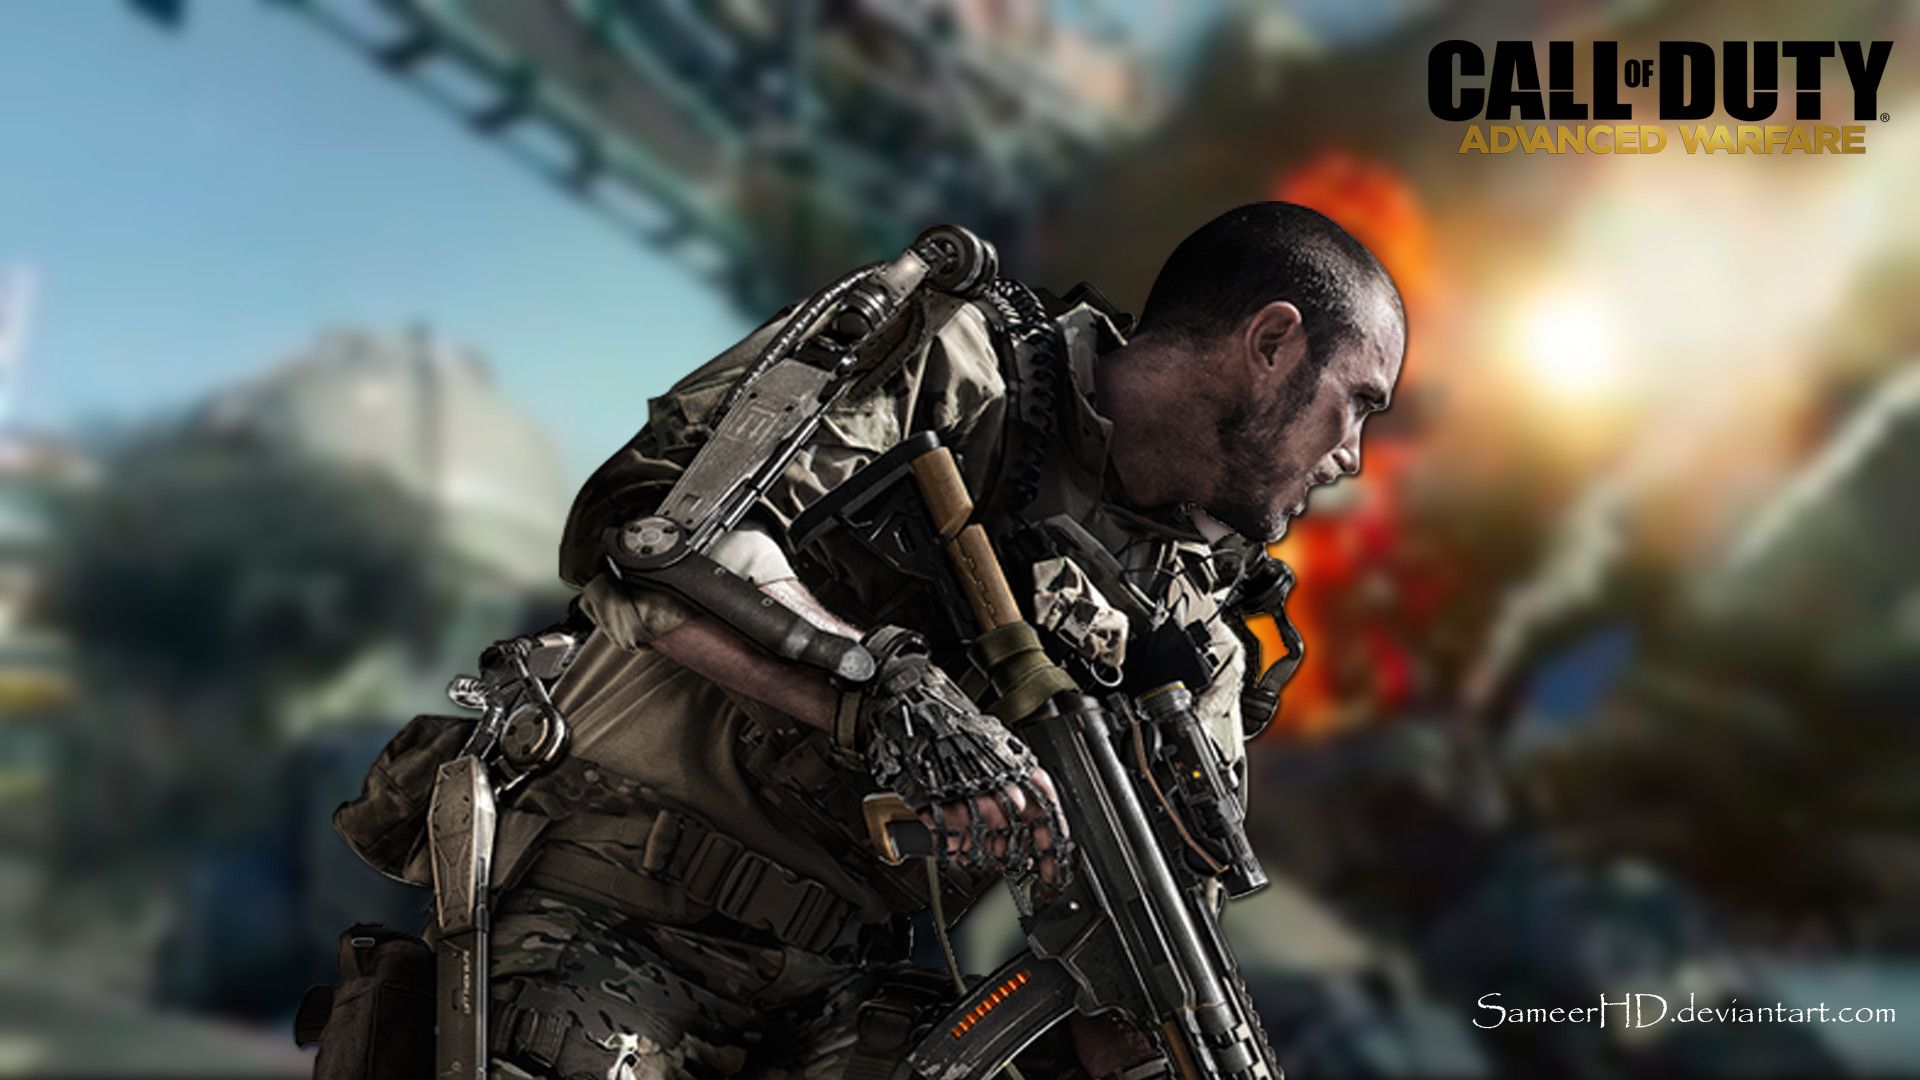 Call of Duty Advanced Warfare Wallpaper background picture